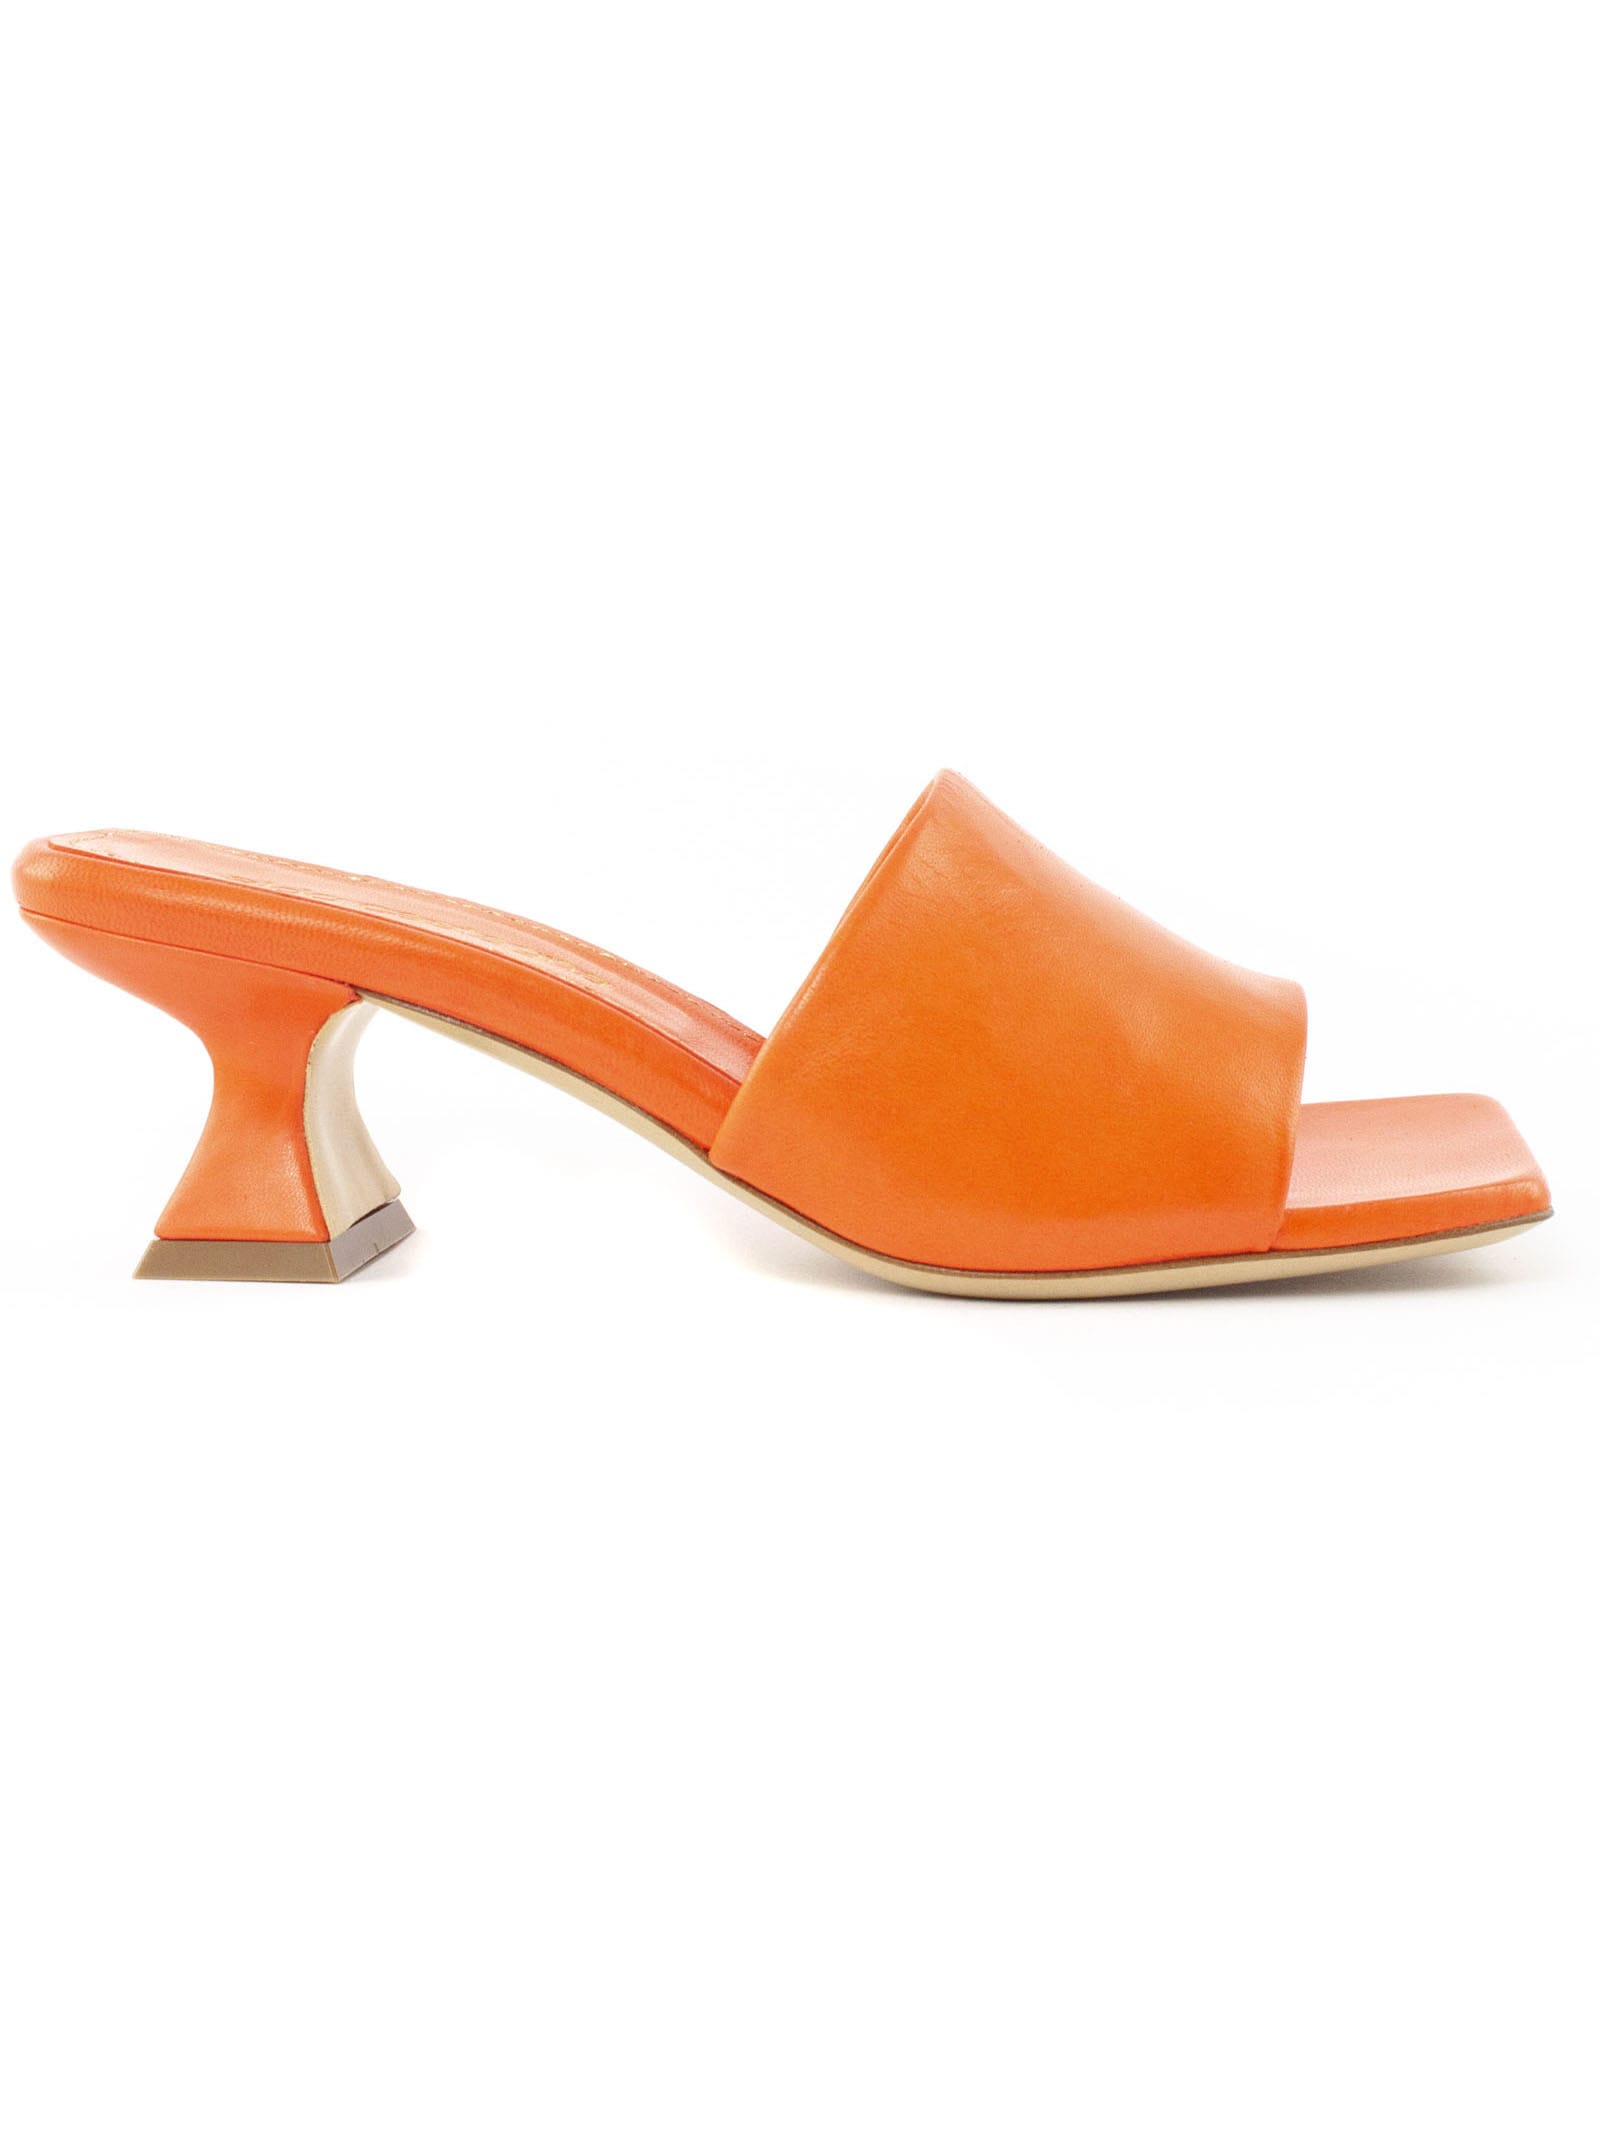 Aldo Castagna Mega Orange Leather Sandal